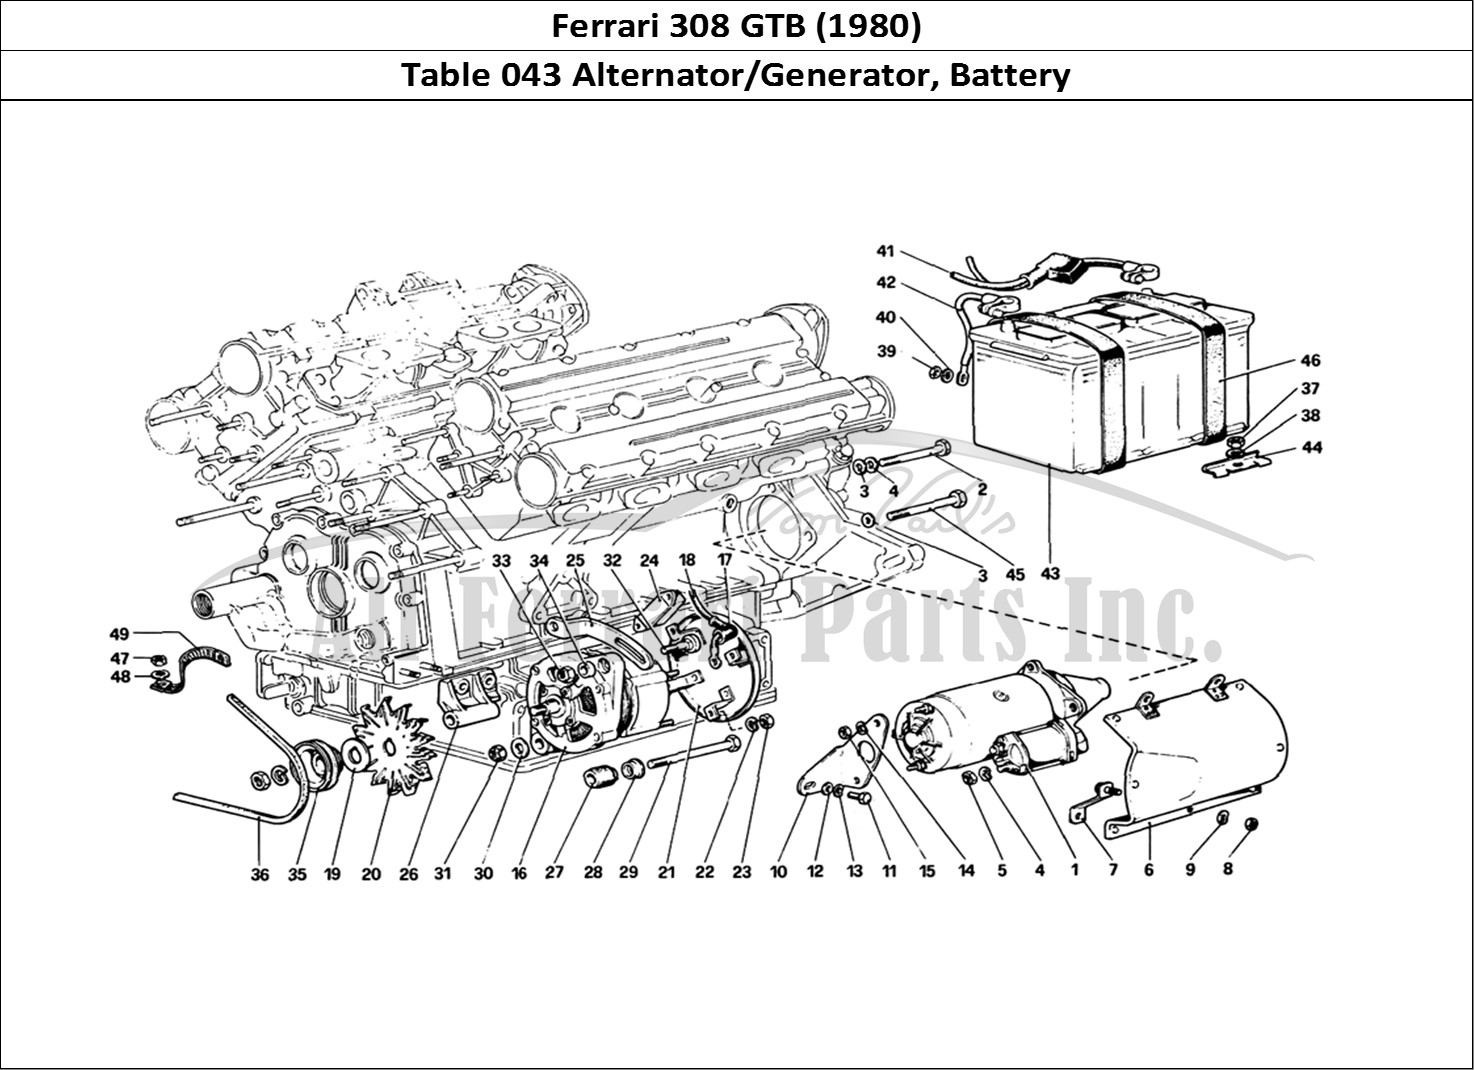 Ferrari Parts Ferrari 308 GTB (1980) Page 043 Electric Generating Syste